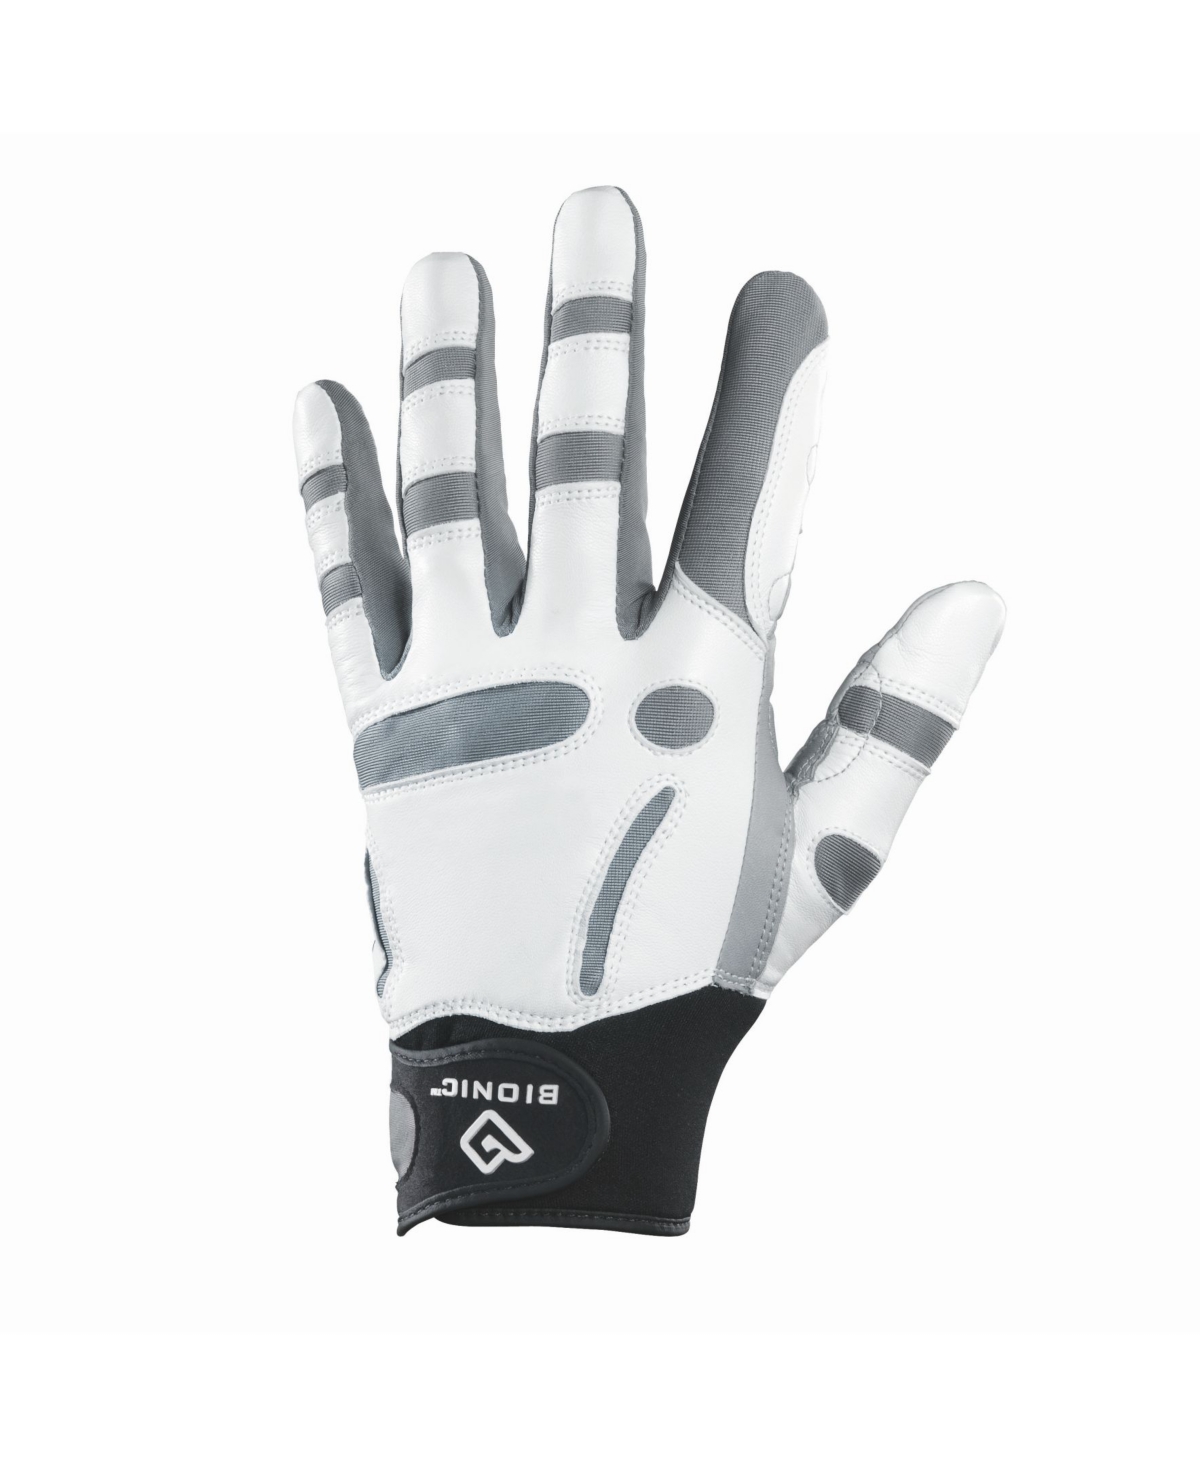 Save 31% on Men's Performance Grip Pro Golf Glove - Left Hand